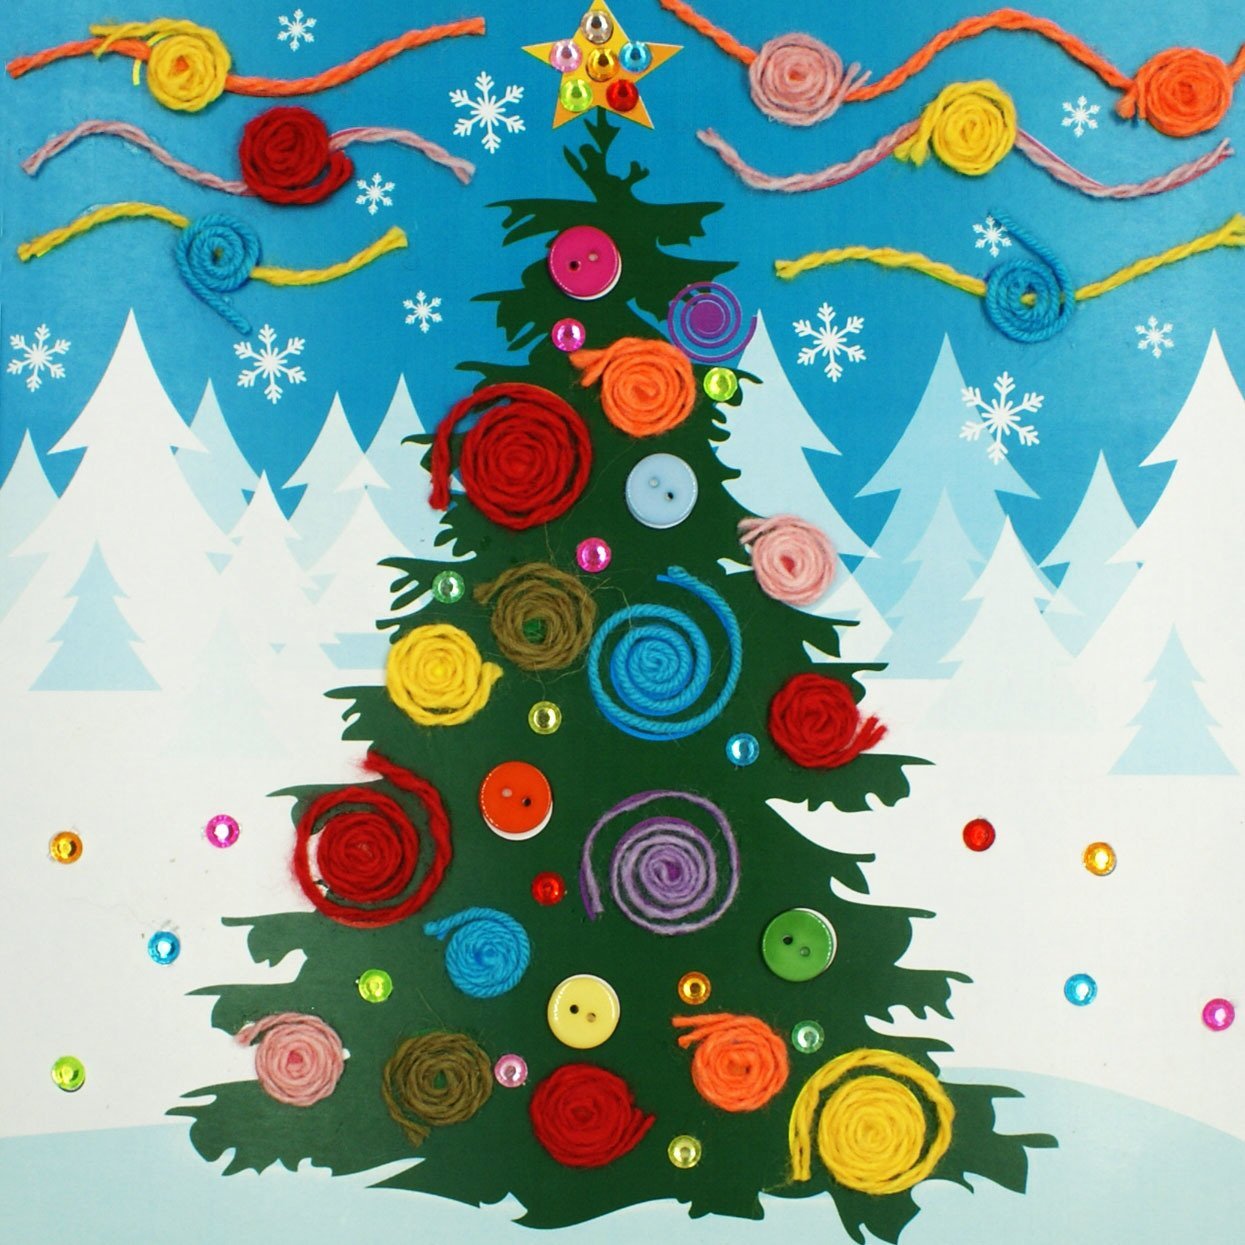 Рисунок на тему новогодняя елка рисунок фото